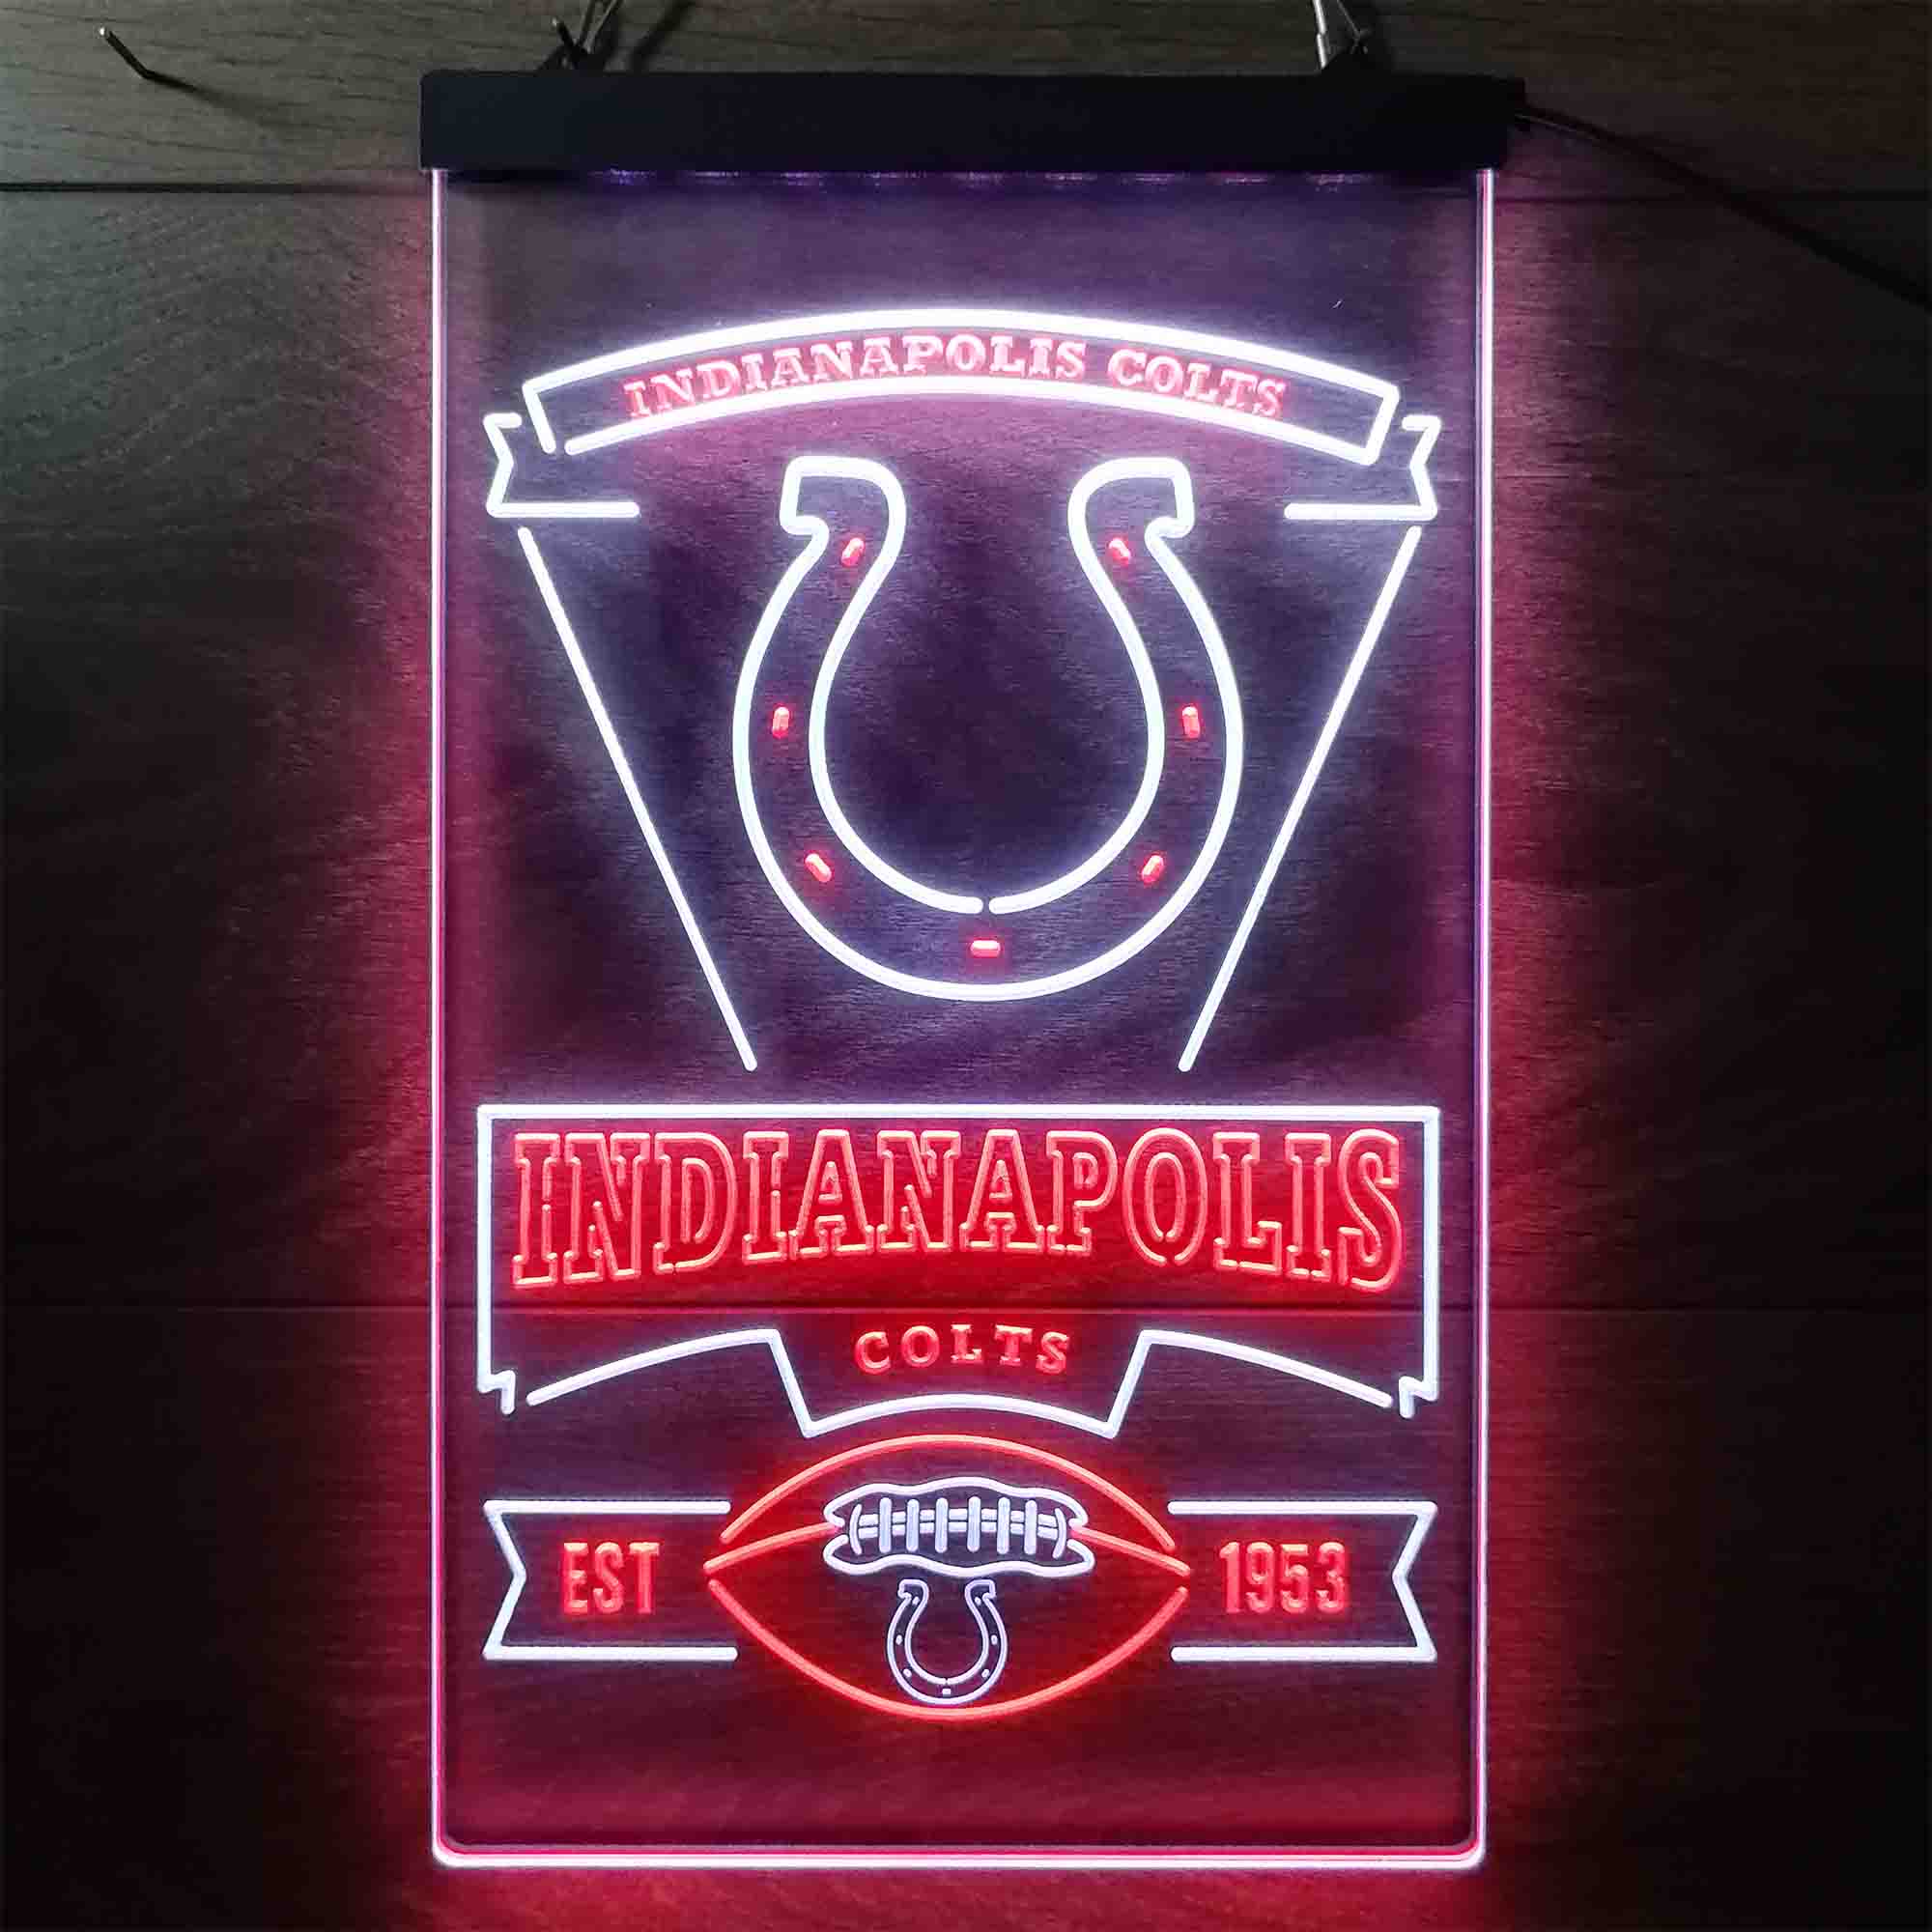 Indianapolis Colts Est. 2953 LED Neon Sign